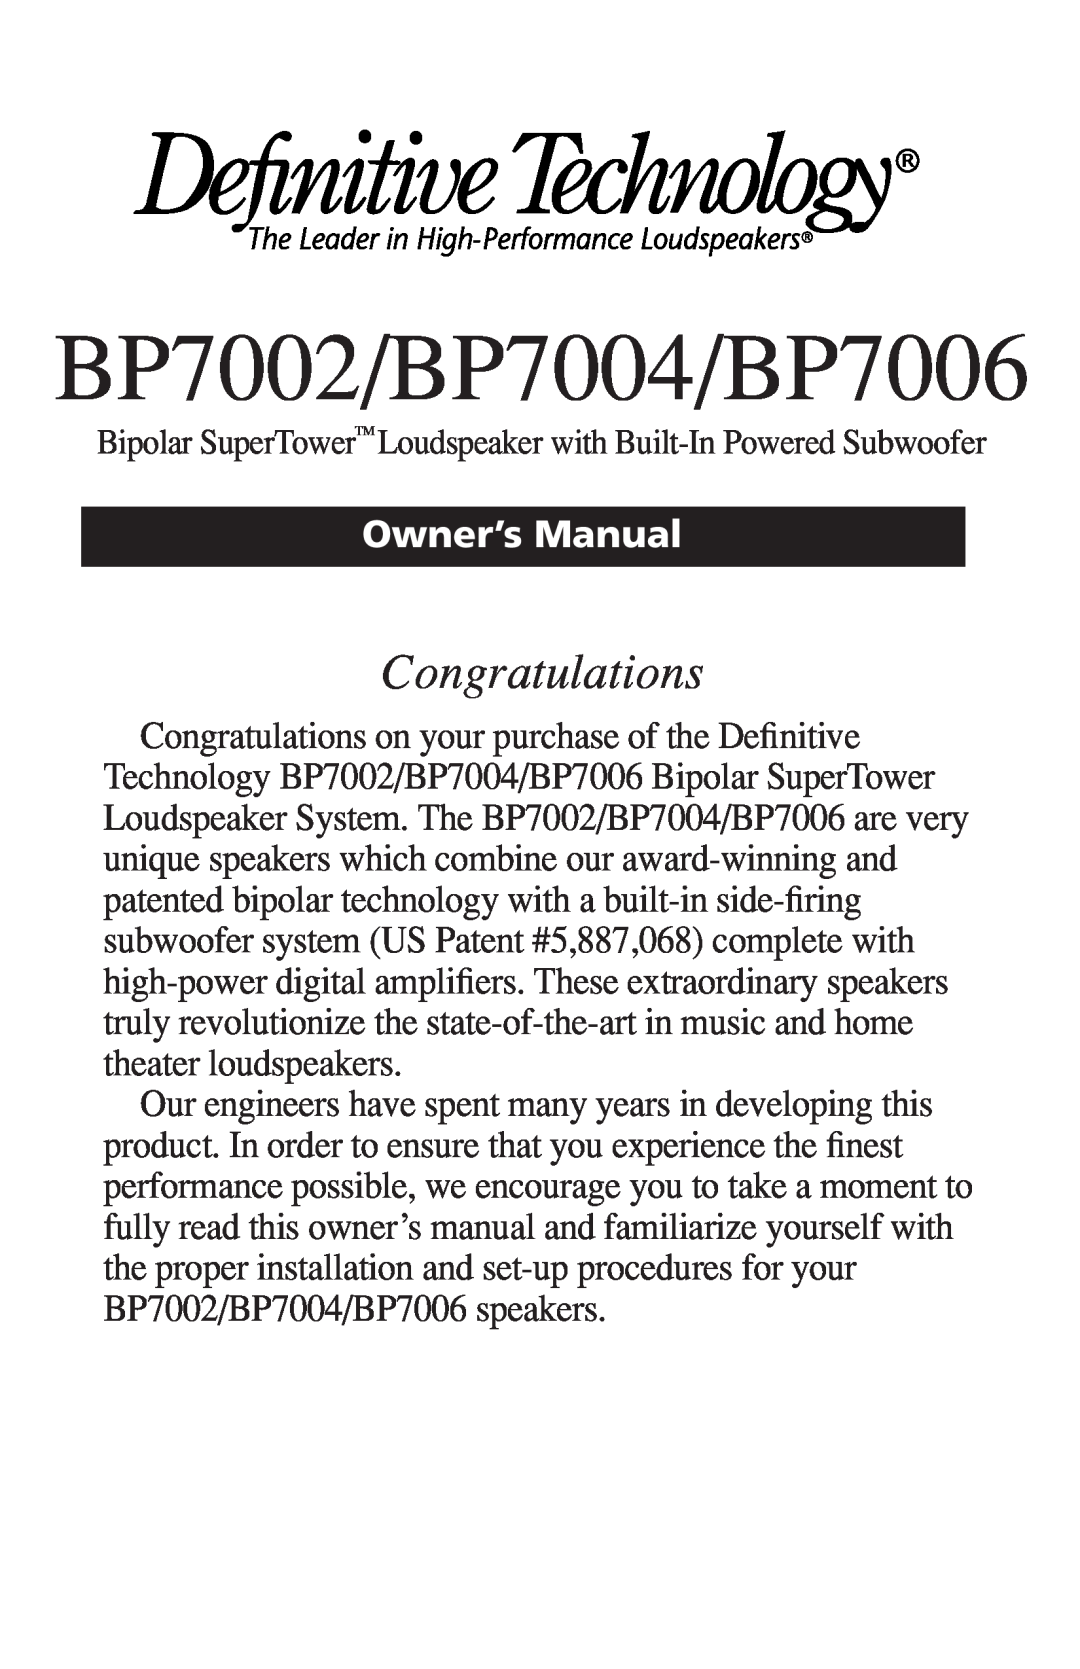 Definitive Technology owner manual BP7002/BP7004/BP7006, Congratulations 